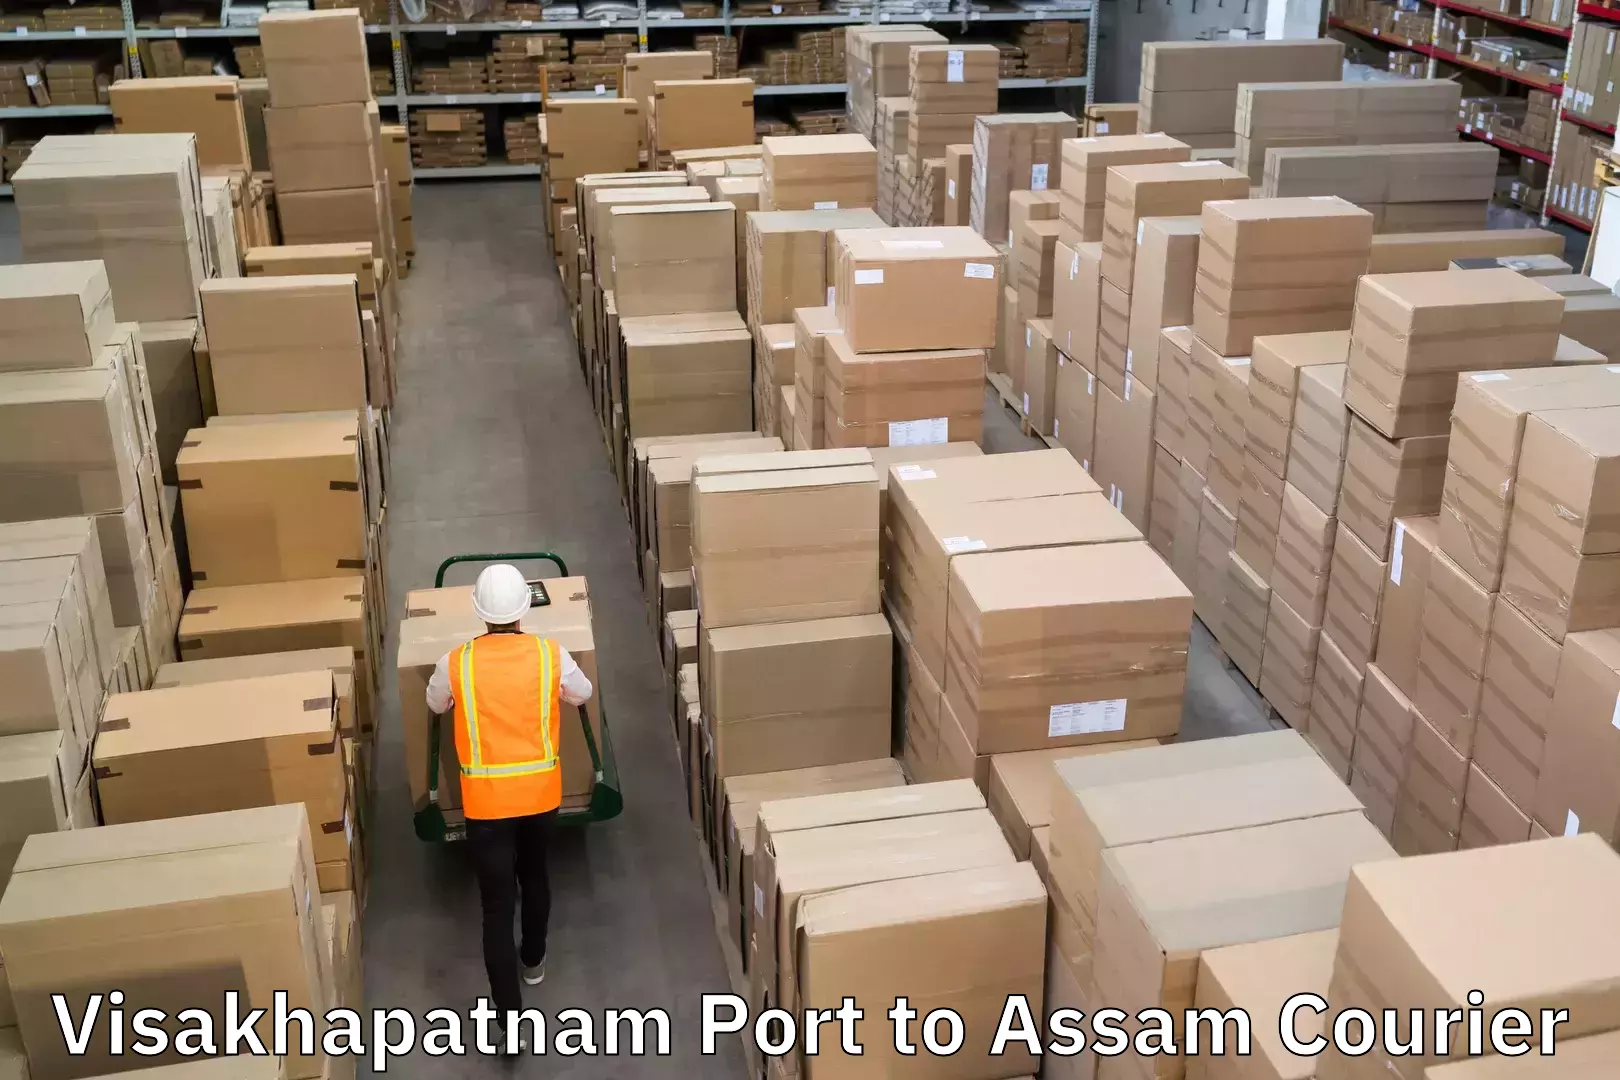 Subscription-based courier Visakhapatnam Port to Assam